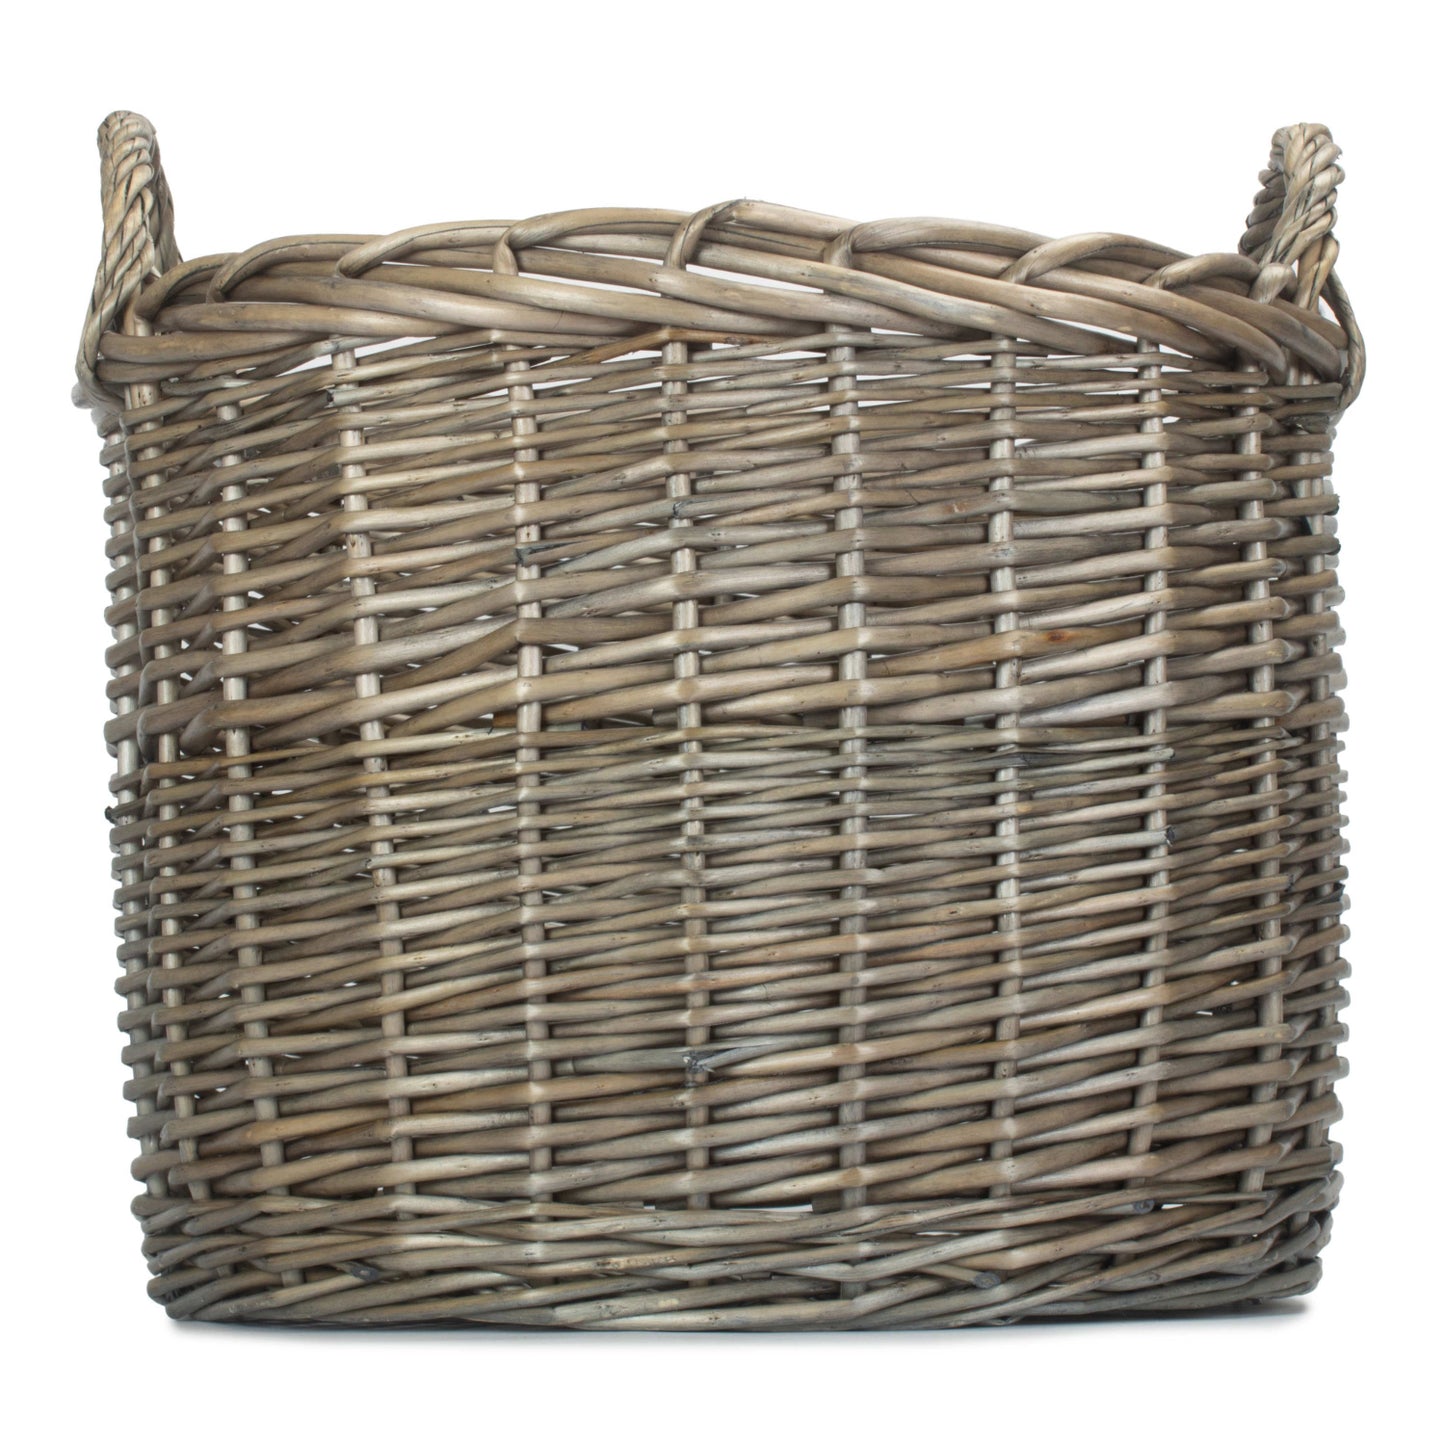 Large Round Straight-sided Wicker Log / Storage Basket